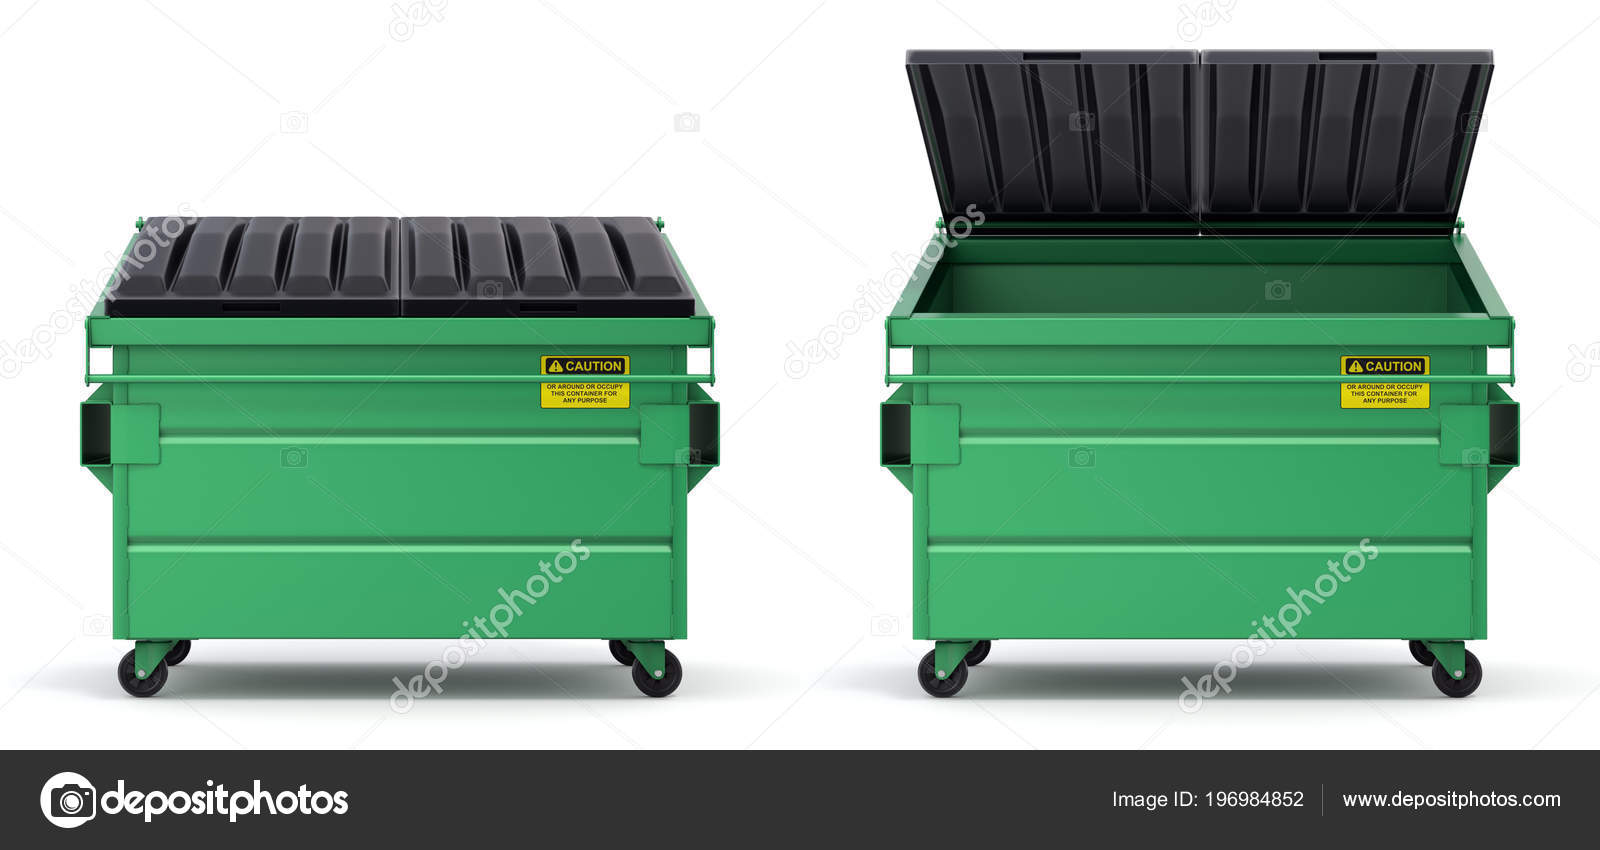 https://st4.depositphotos.com/1323882/19698/i/1600/depositphotos_196984852-stock-photo-open-closed-green-dumpster-illustration.jpg